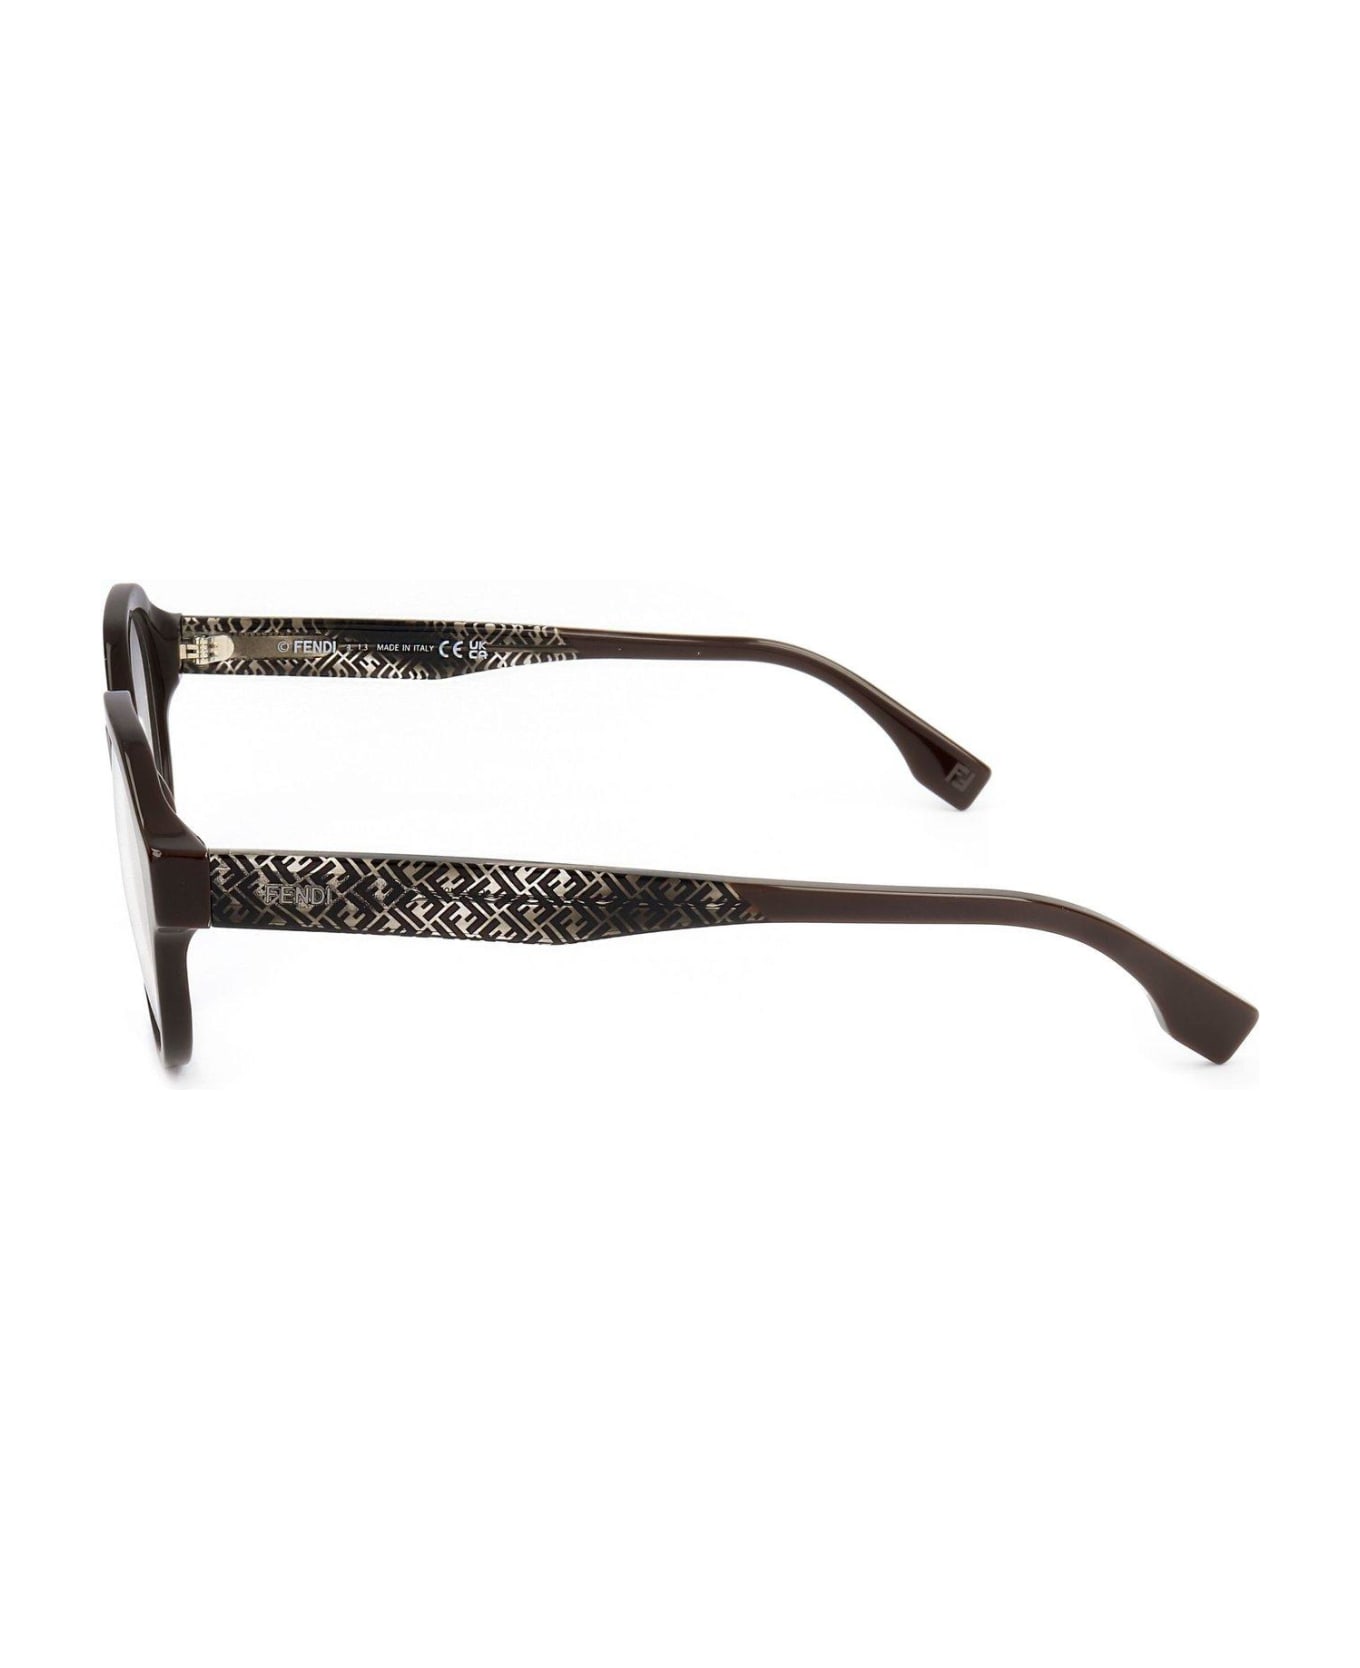 Fendi Eyewear Round Frame Glasses - 050